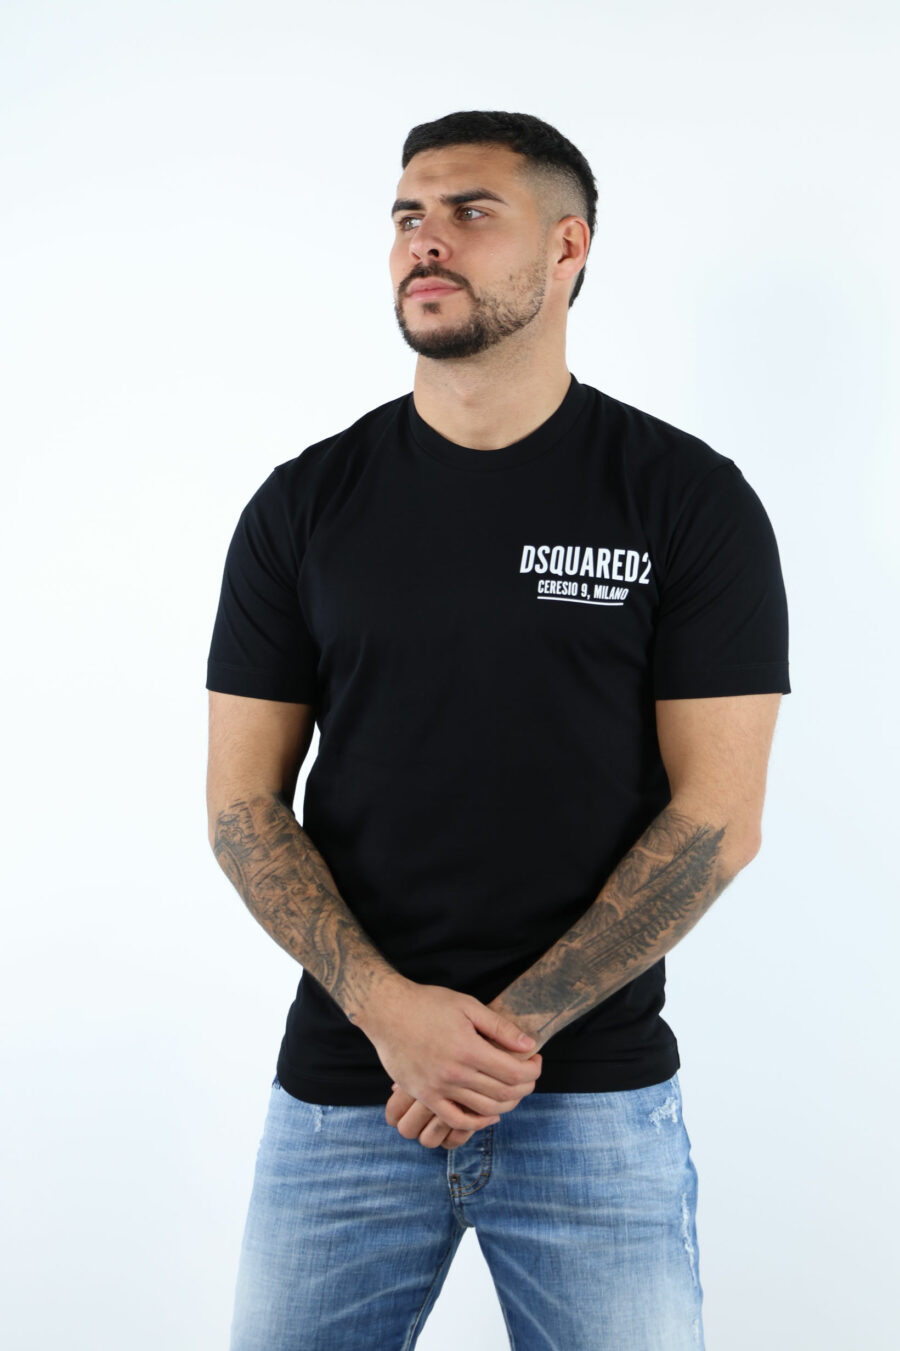 Schwarzes T-shirt mit Minilogo "ceresio 9, milano" - 106877